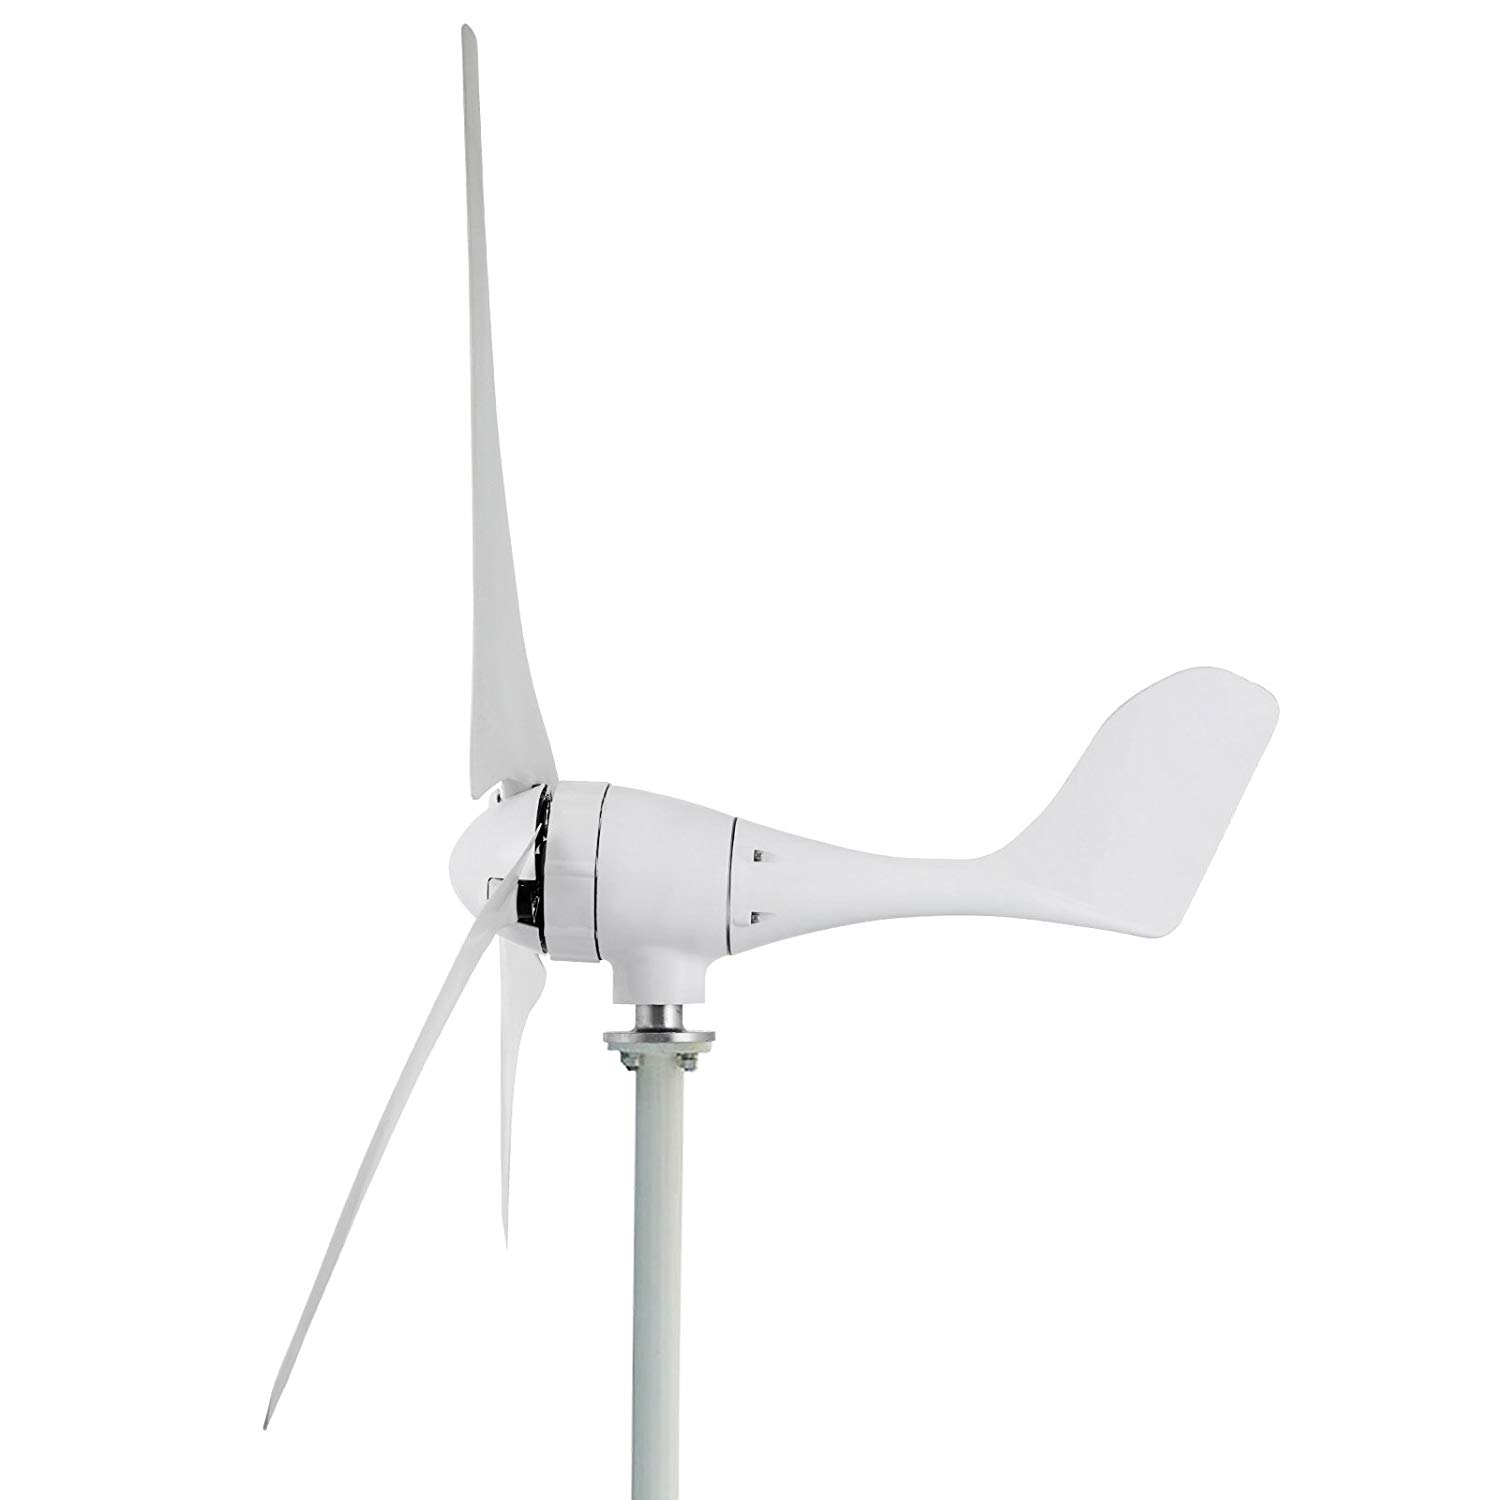 600W 24V/48V Wind Turbine with Fix Tower